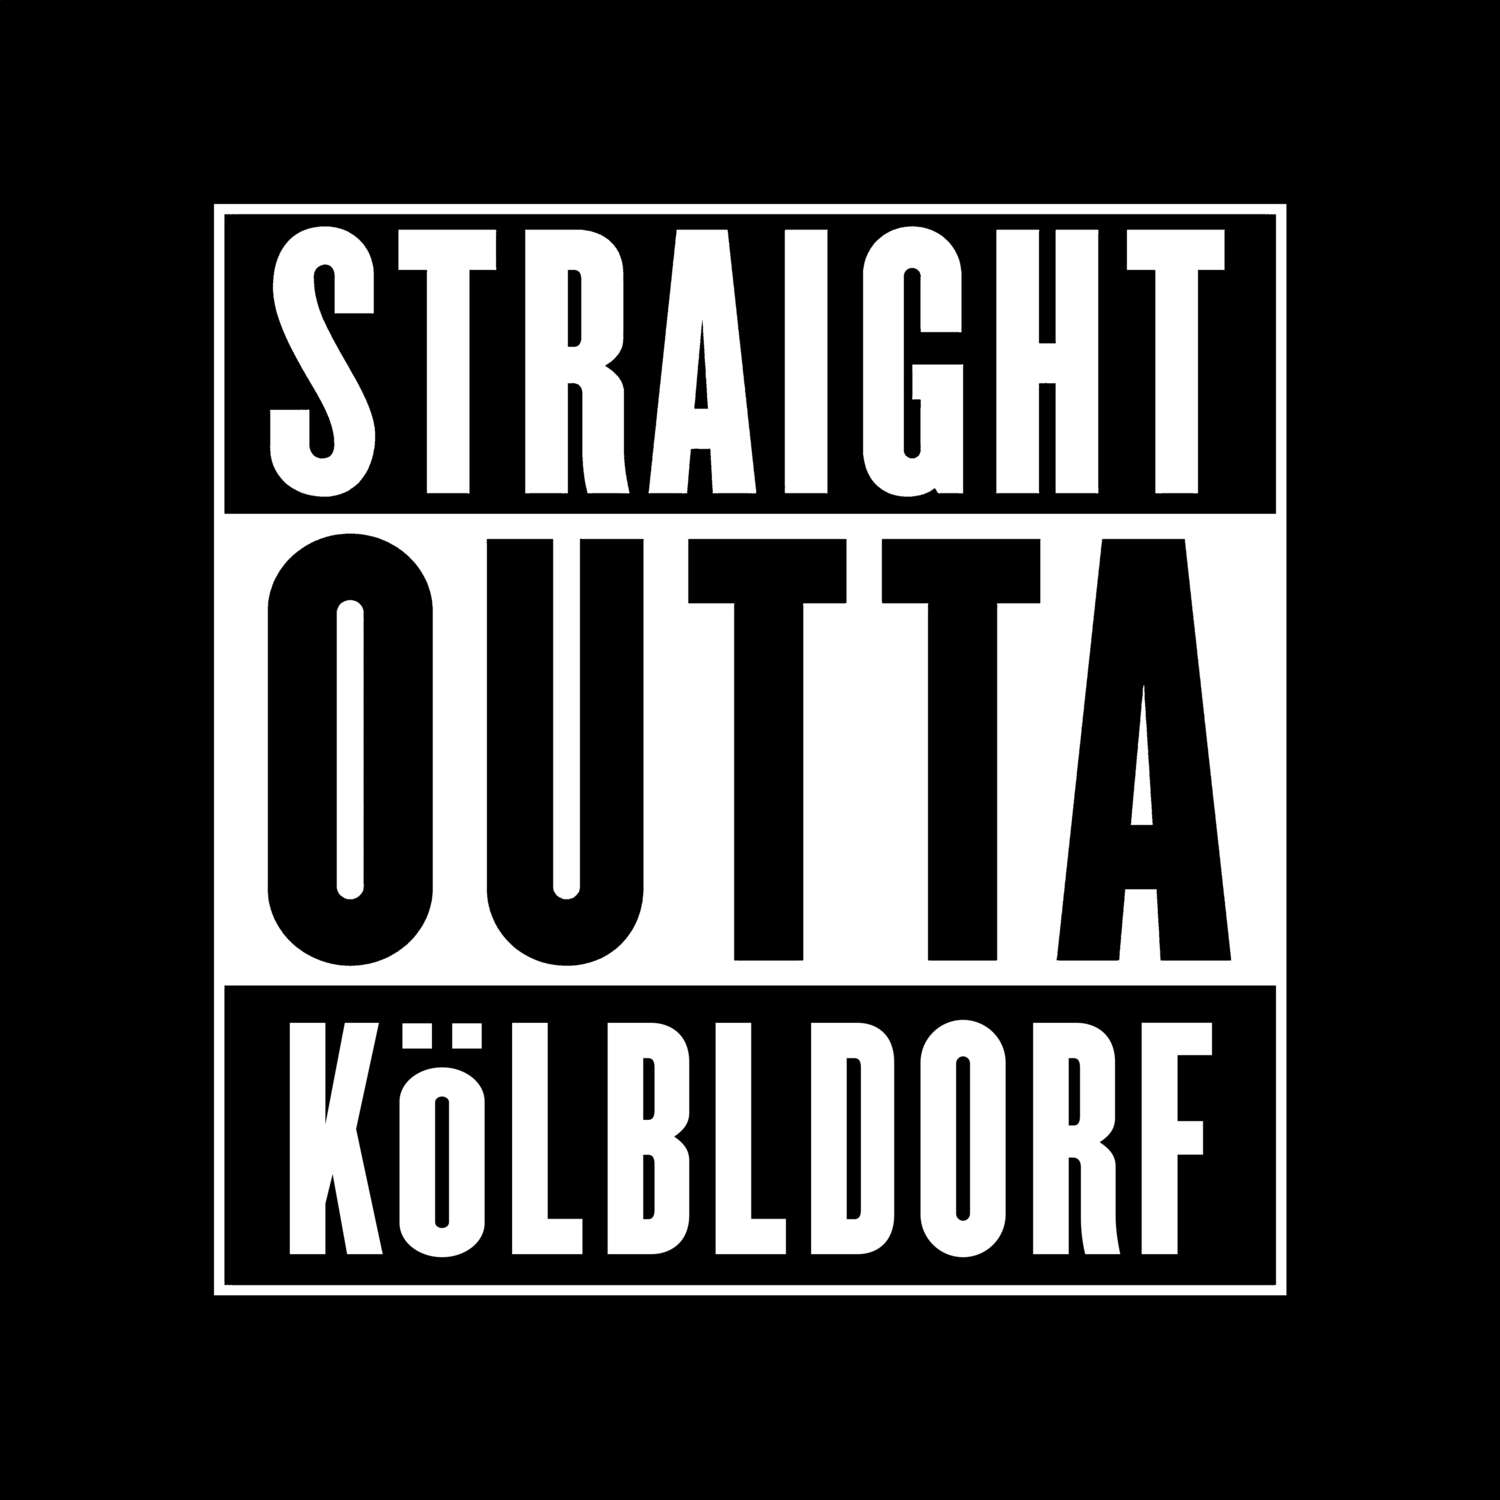 Kölbldorf T-Shirt »Straight Outta«